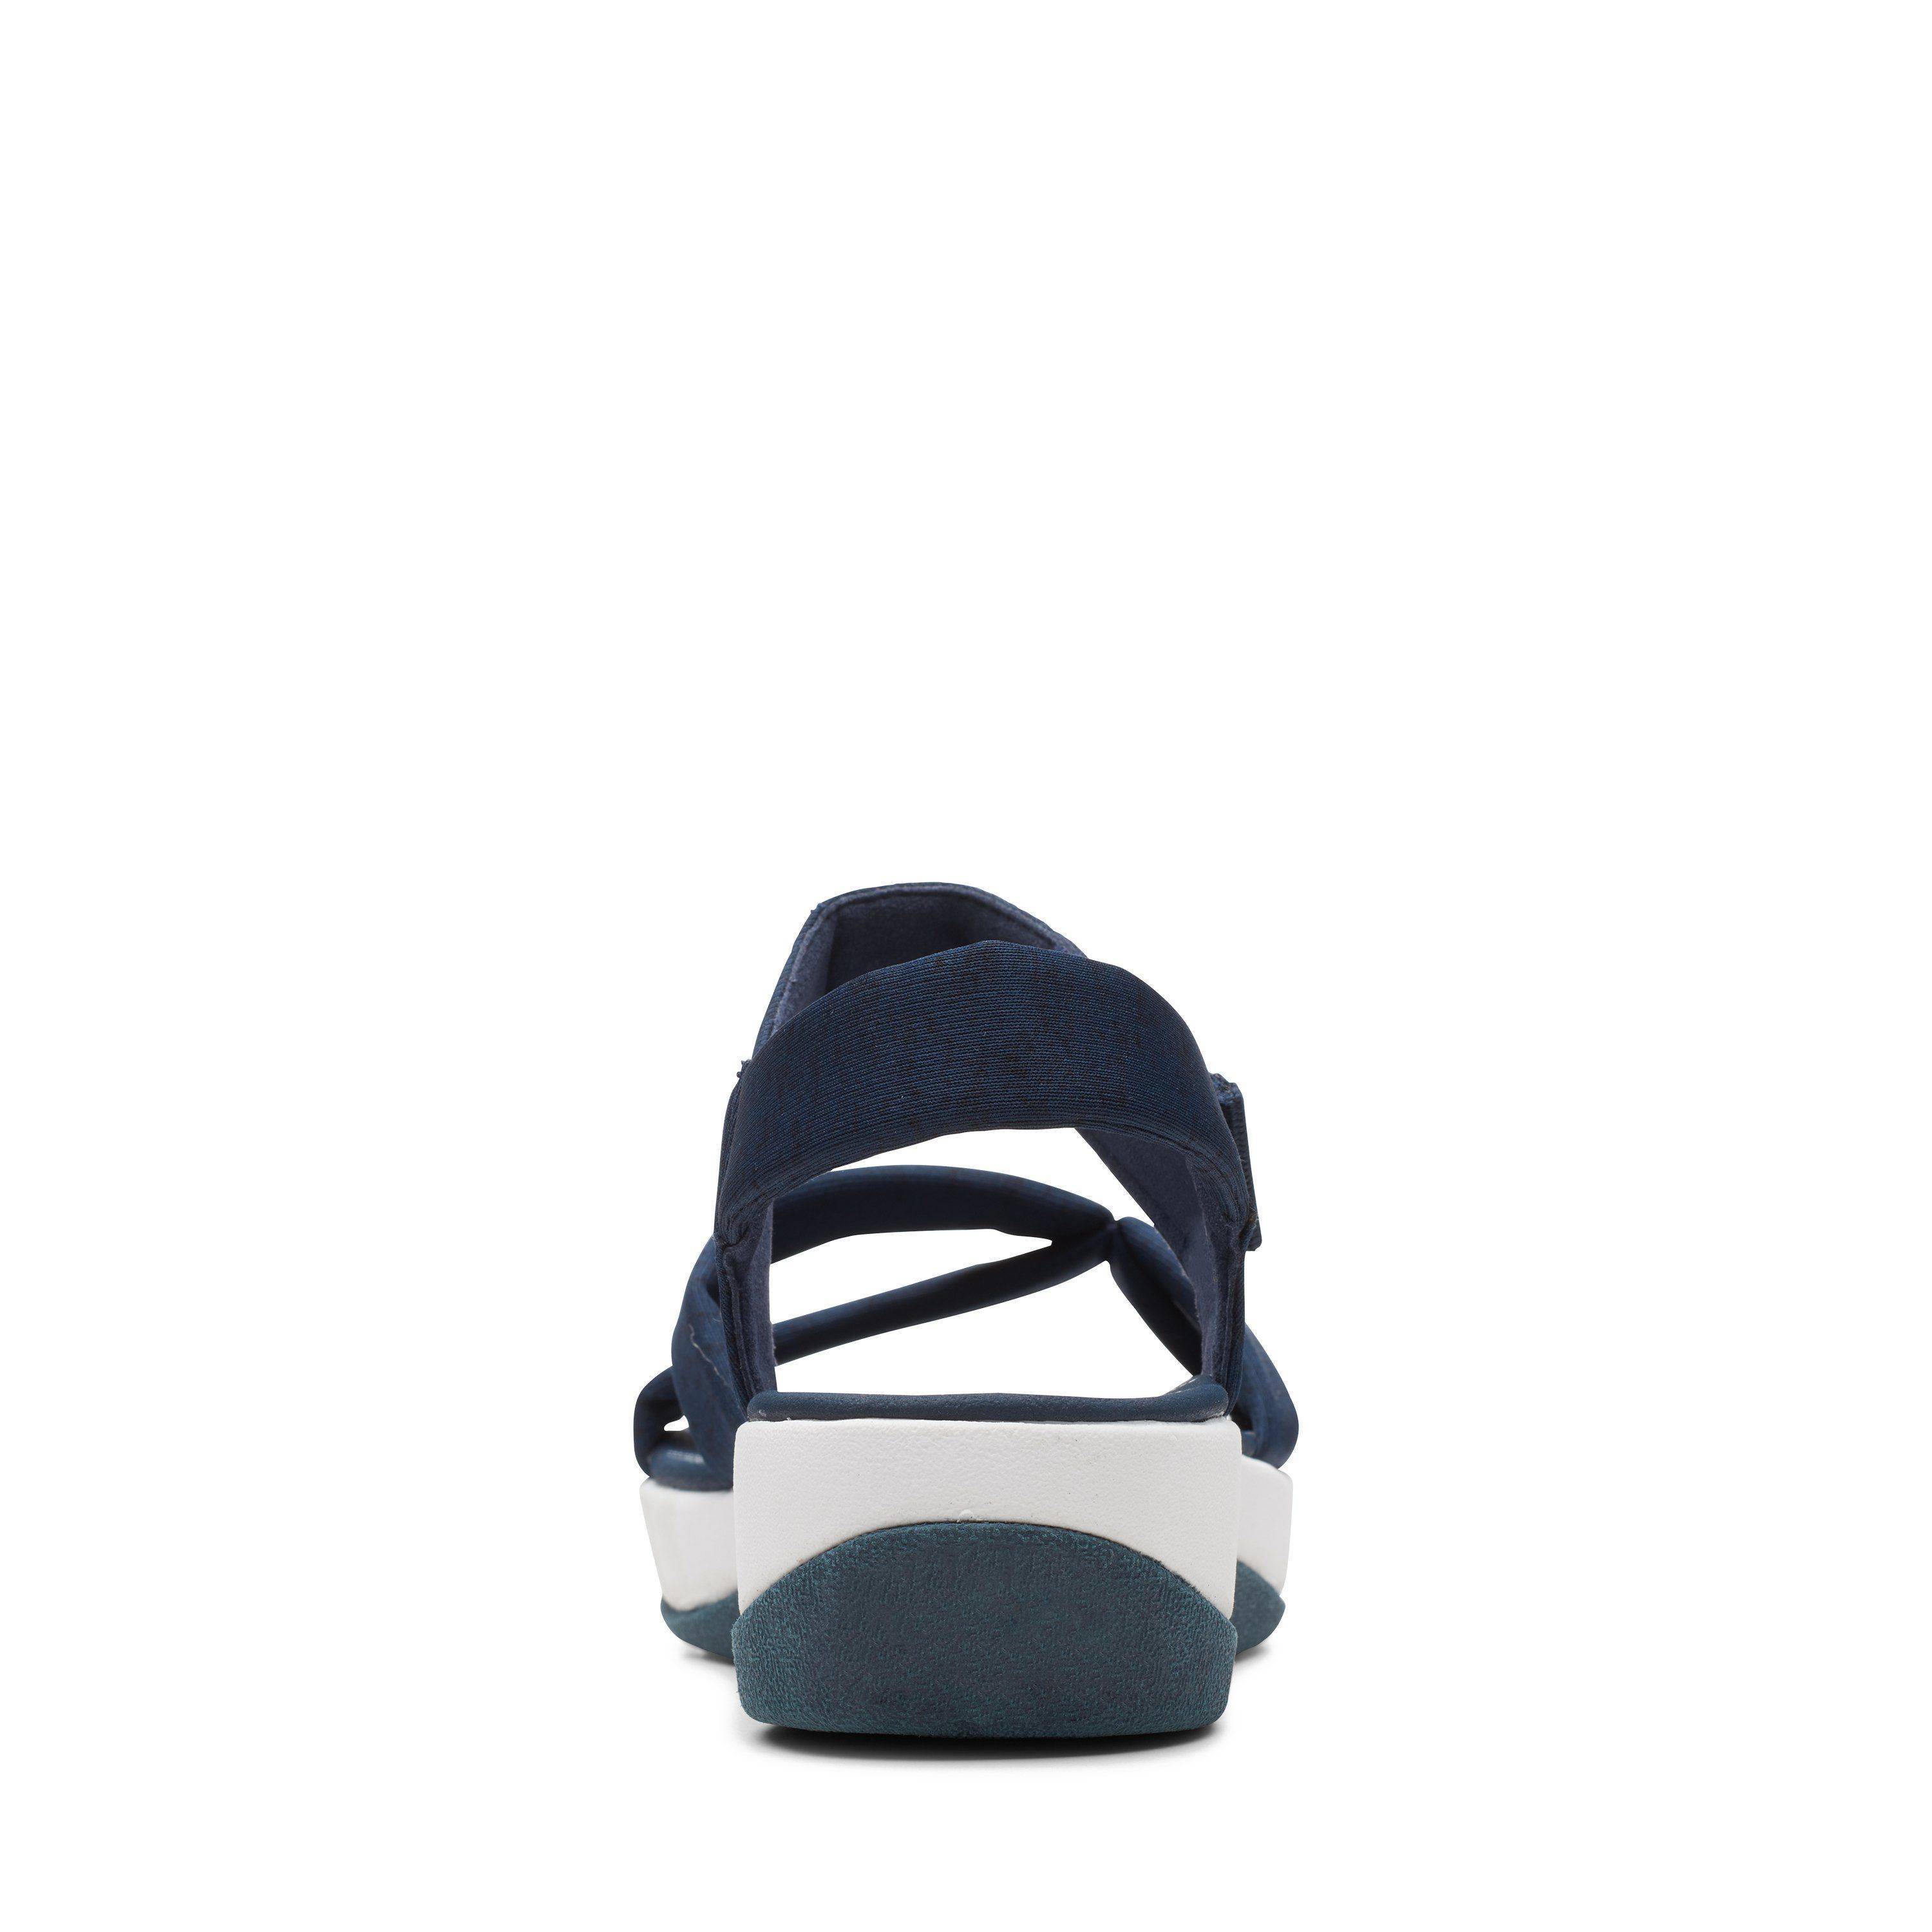 Женские сандалии Clarks, синие, цвет синий, размер 40 - фото 6